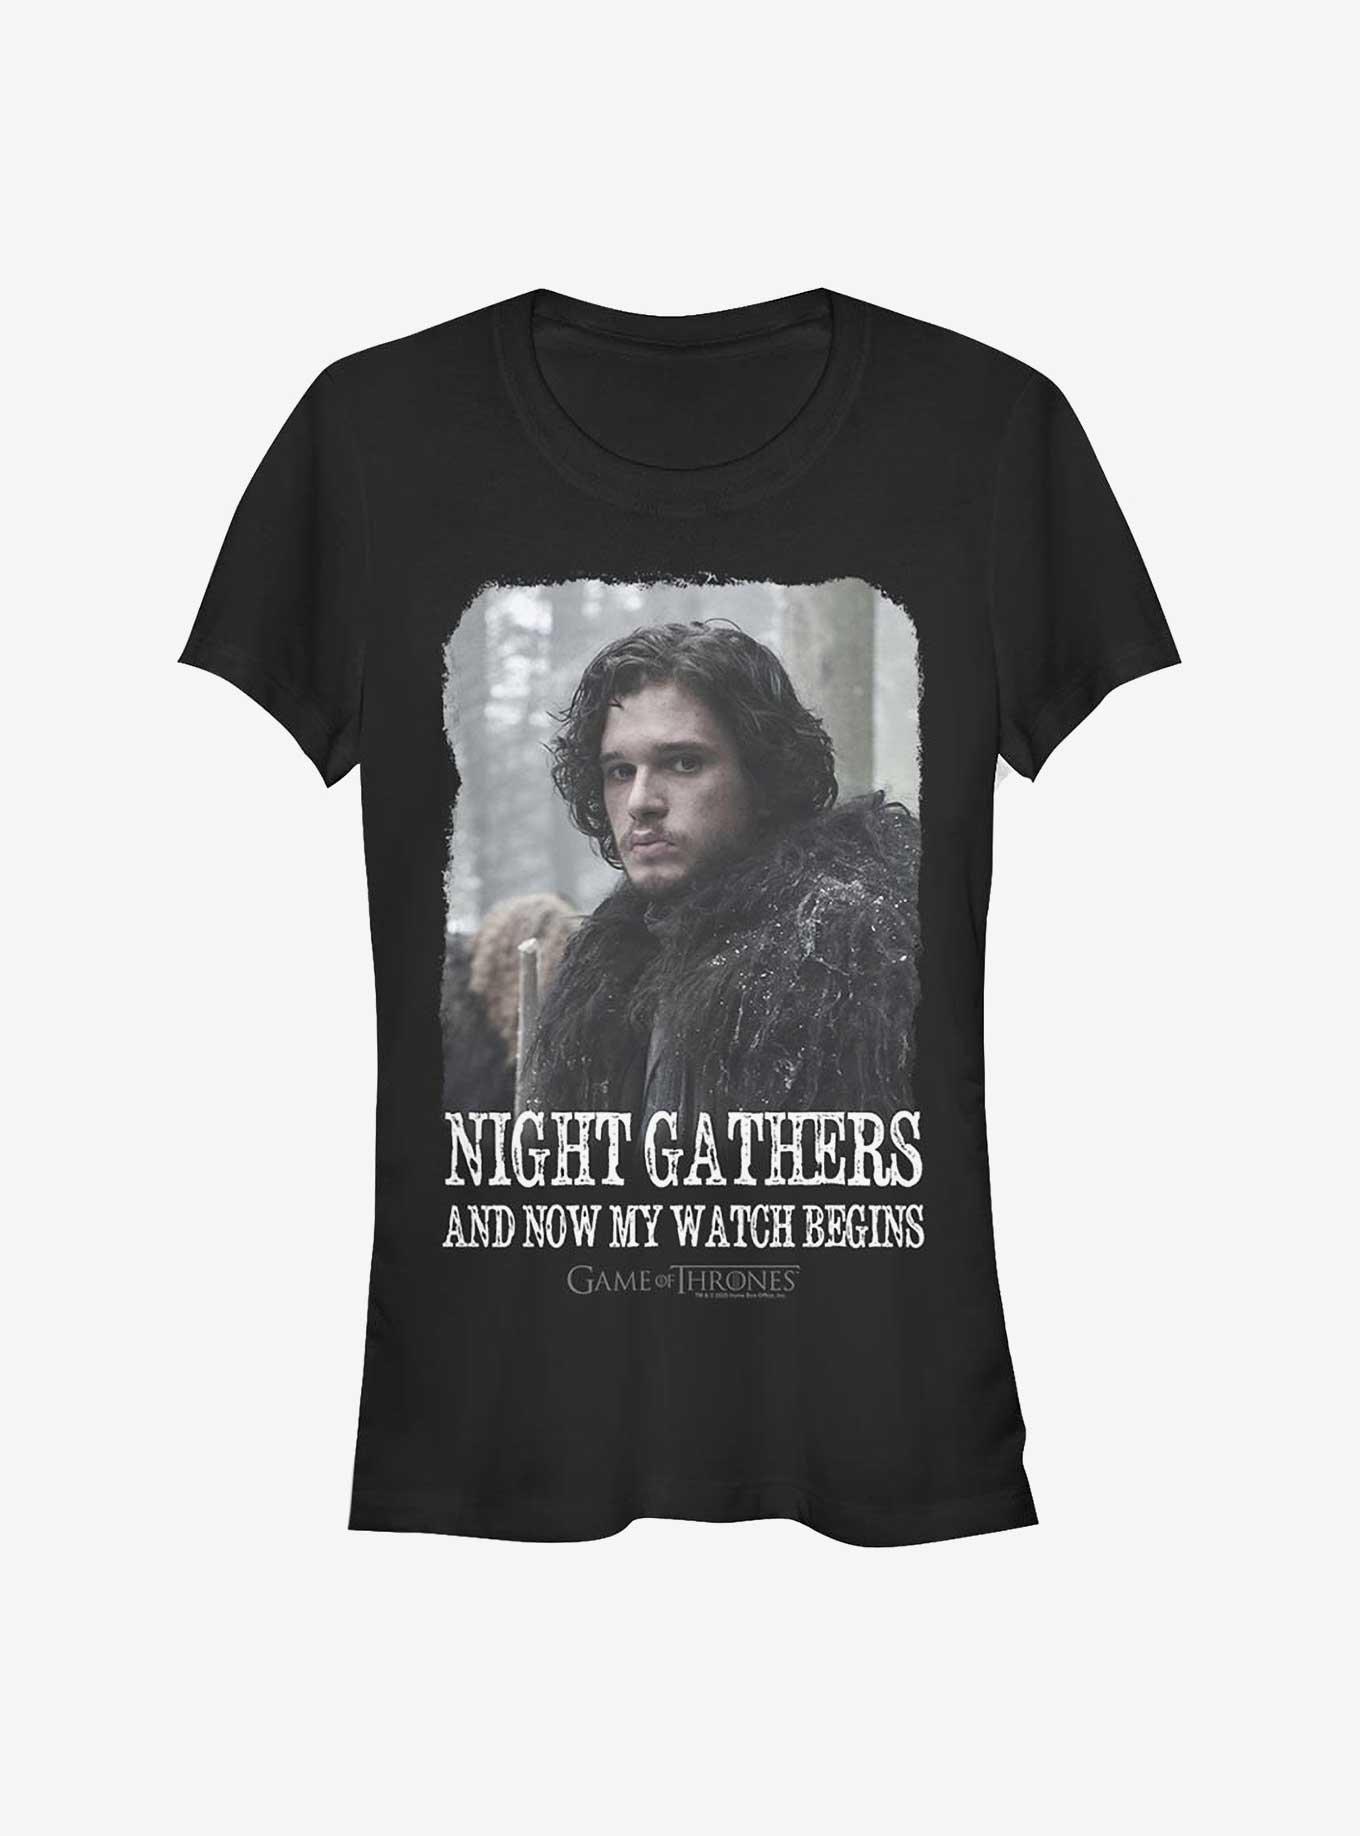 Game Of Thrones Jon Snow Night Watch Begins Girls T-Shirt